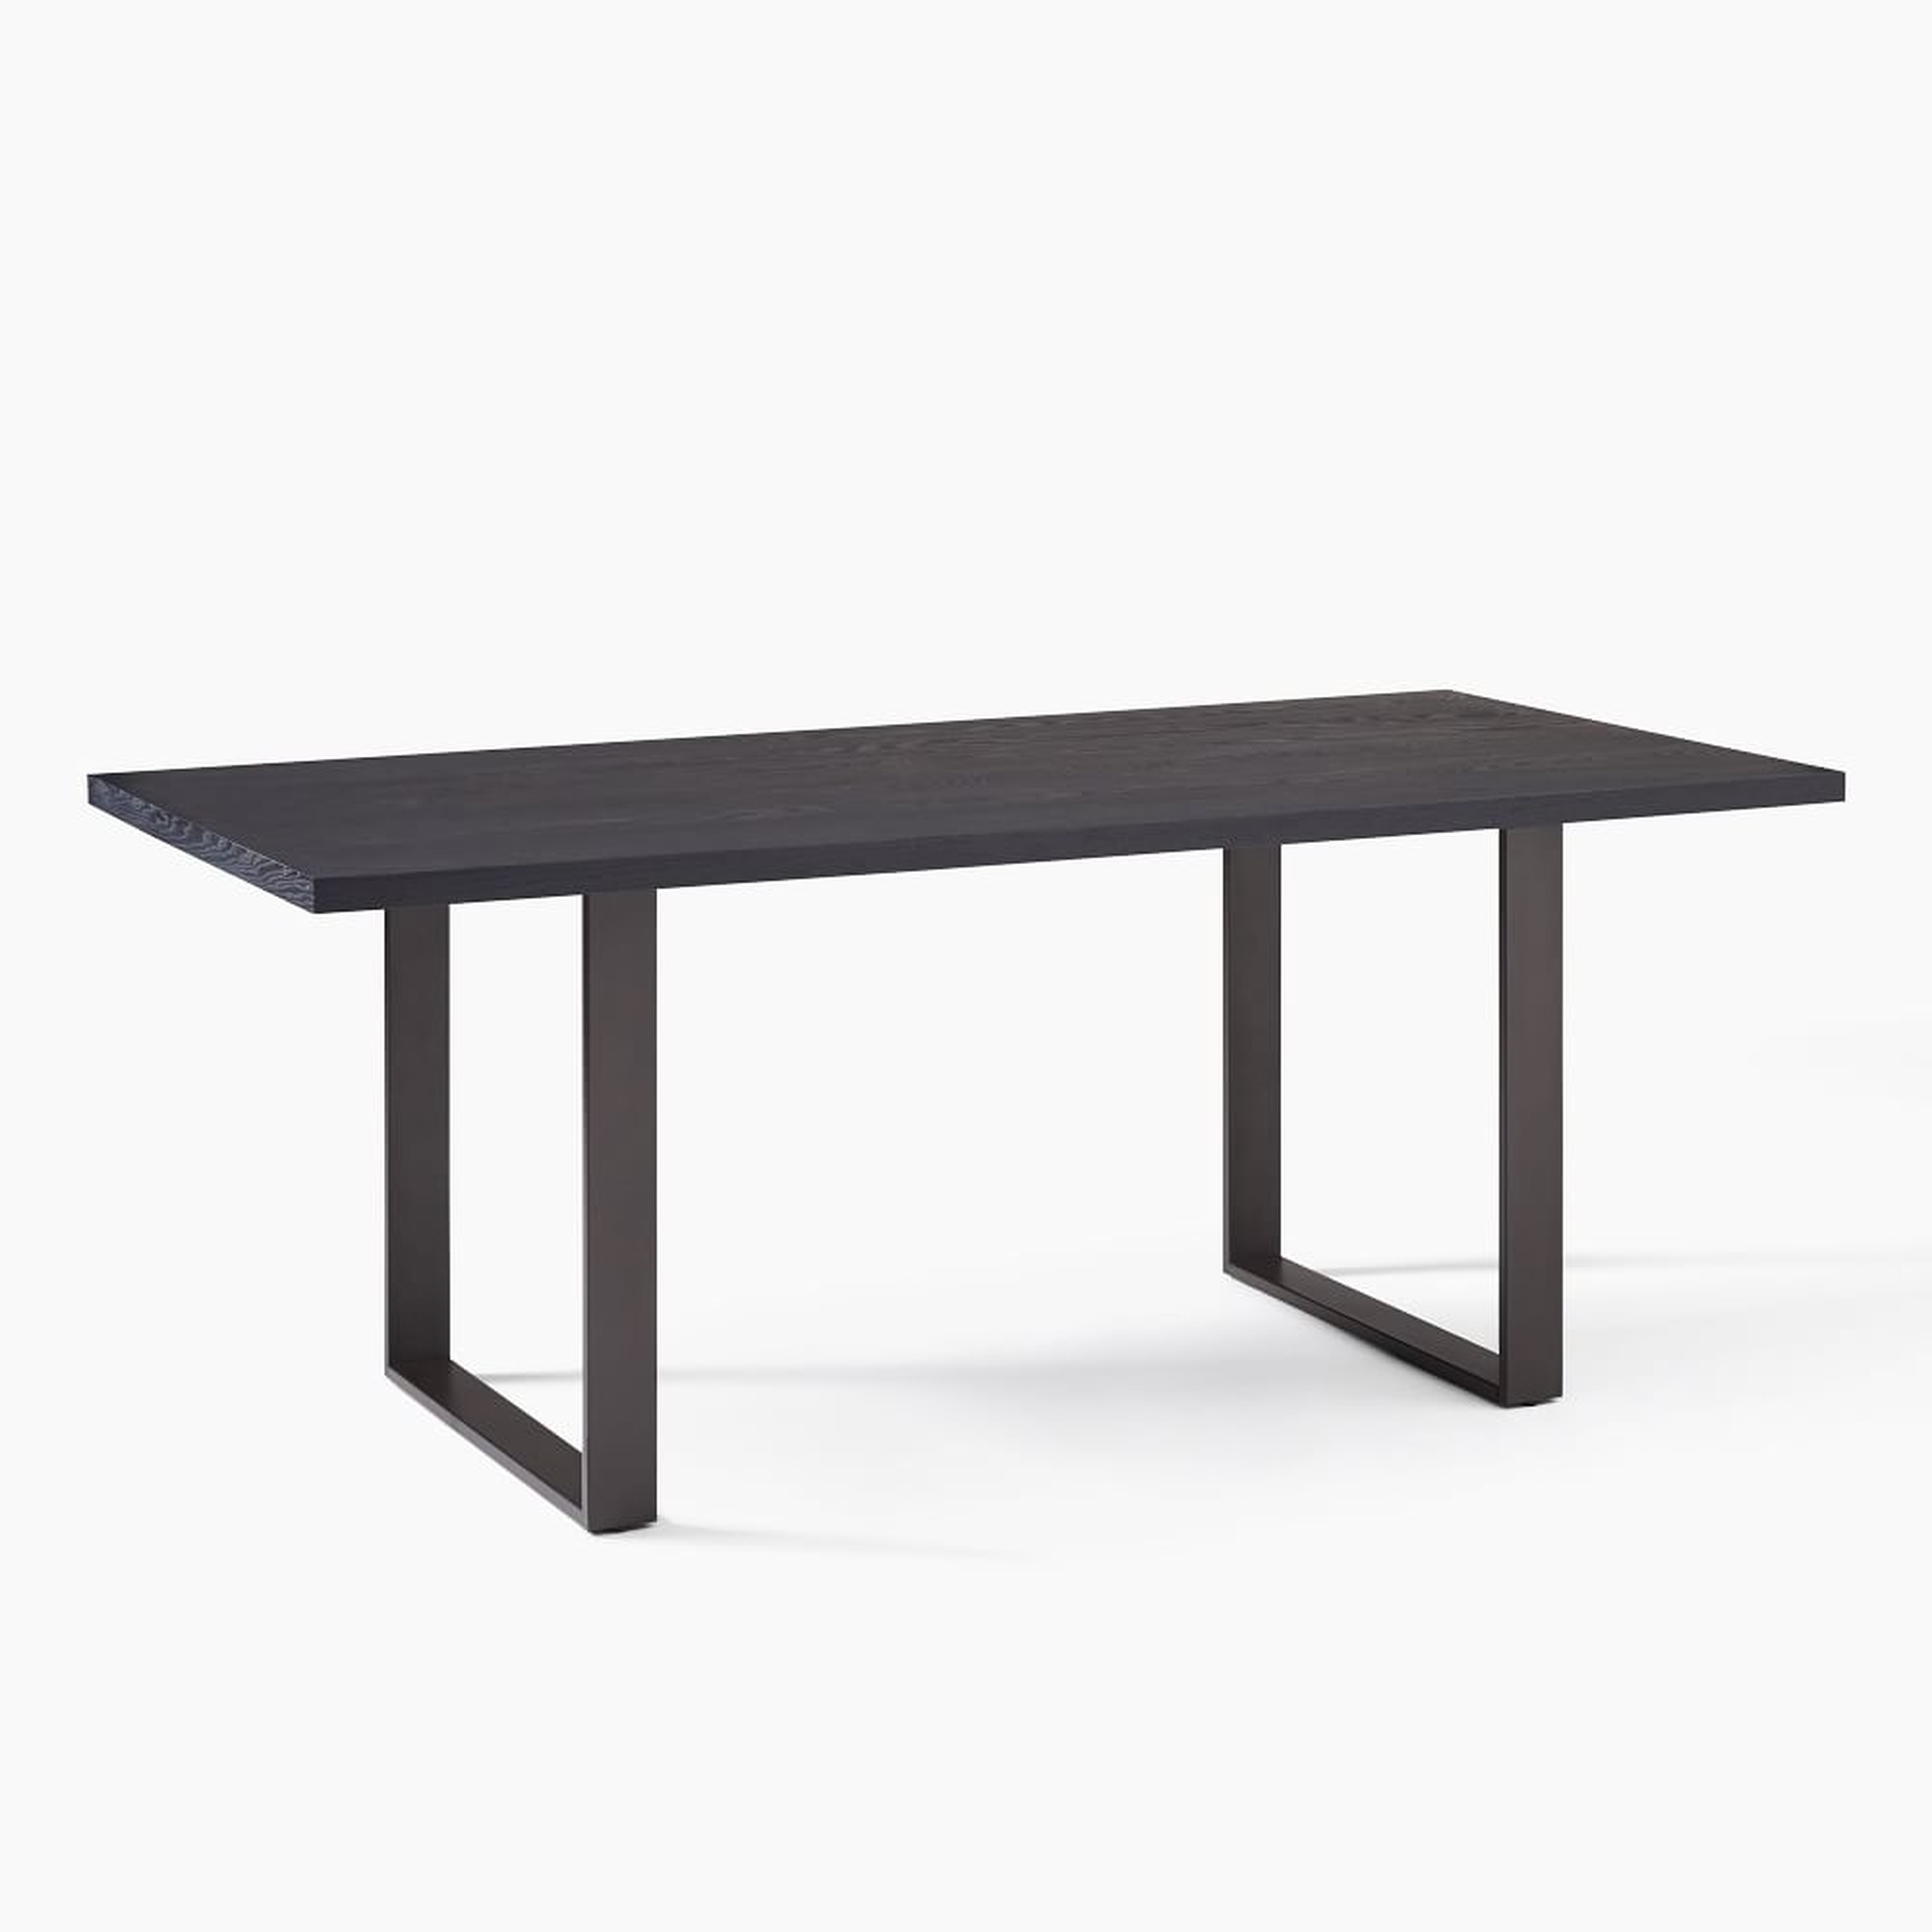 Tompkins Industrial 74" Dining Table, Black, Dark Bronze - West Elm